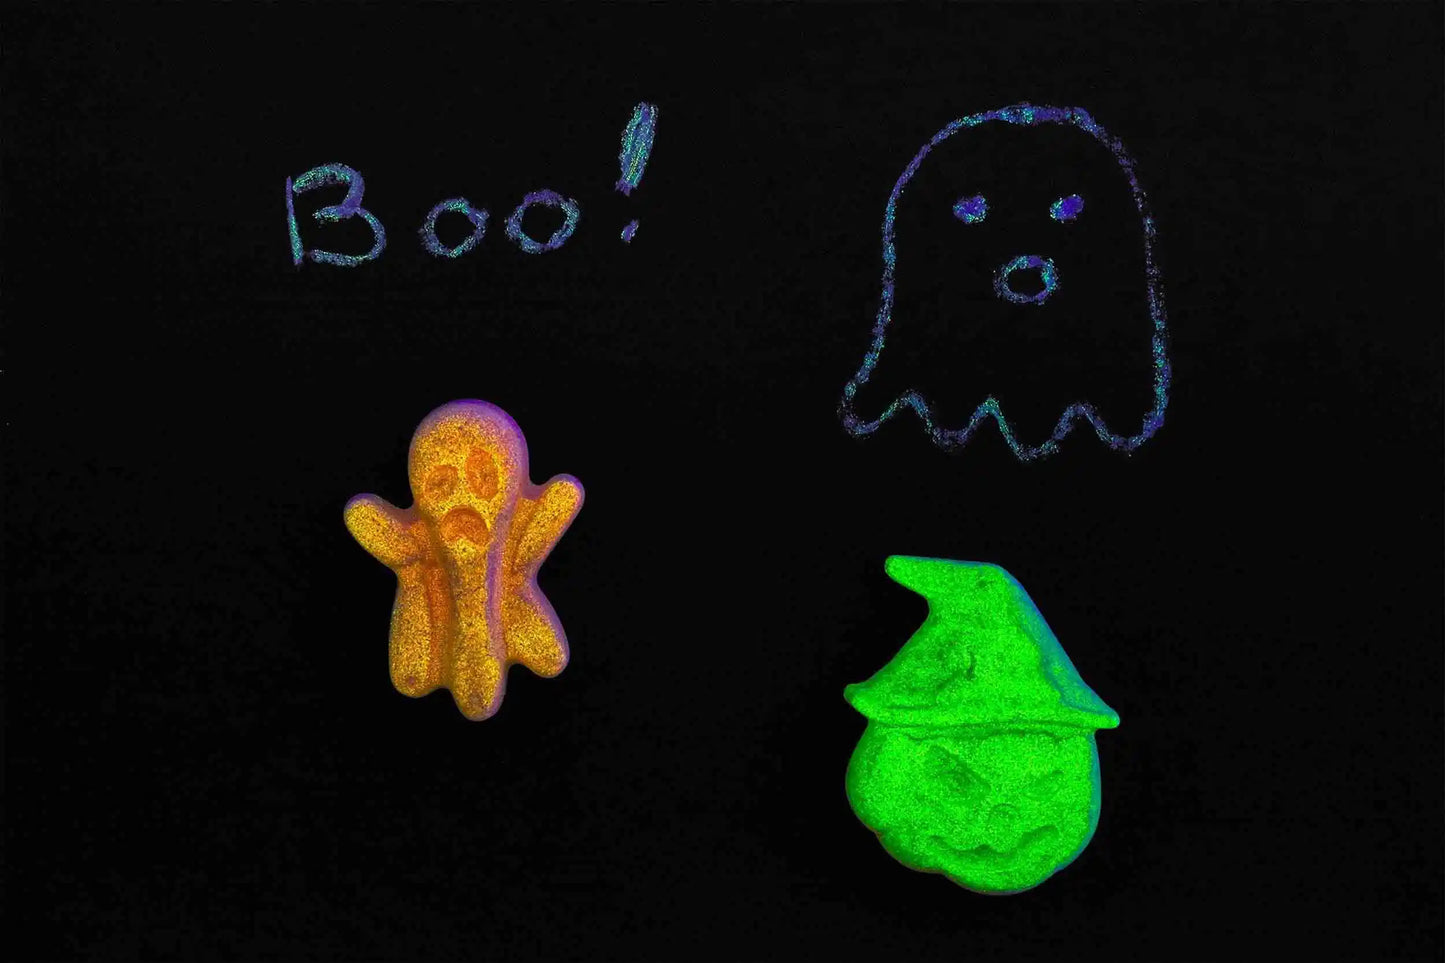 Ghost Glow-in-the-Dark Halloween Chalk